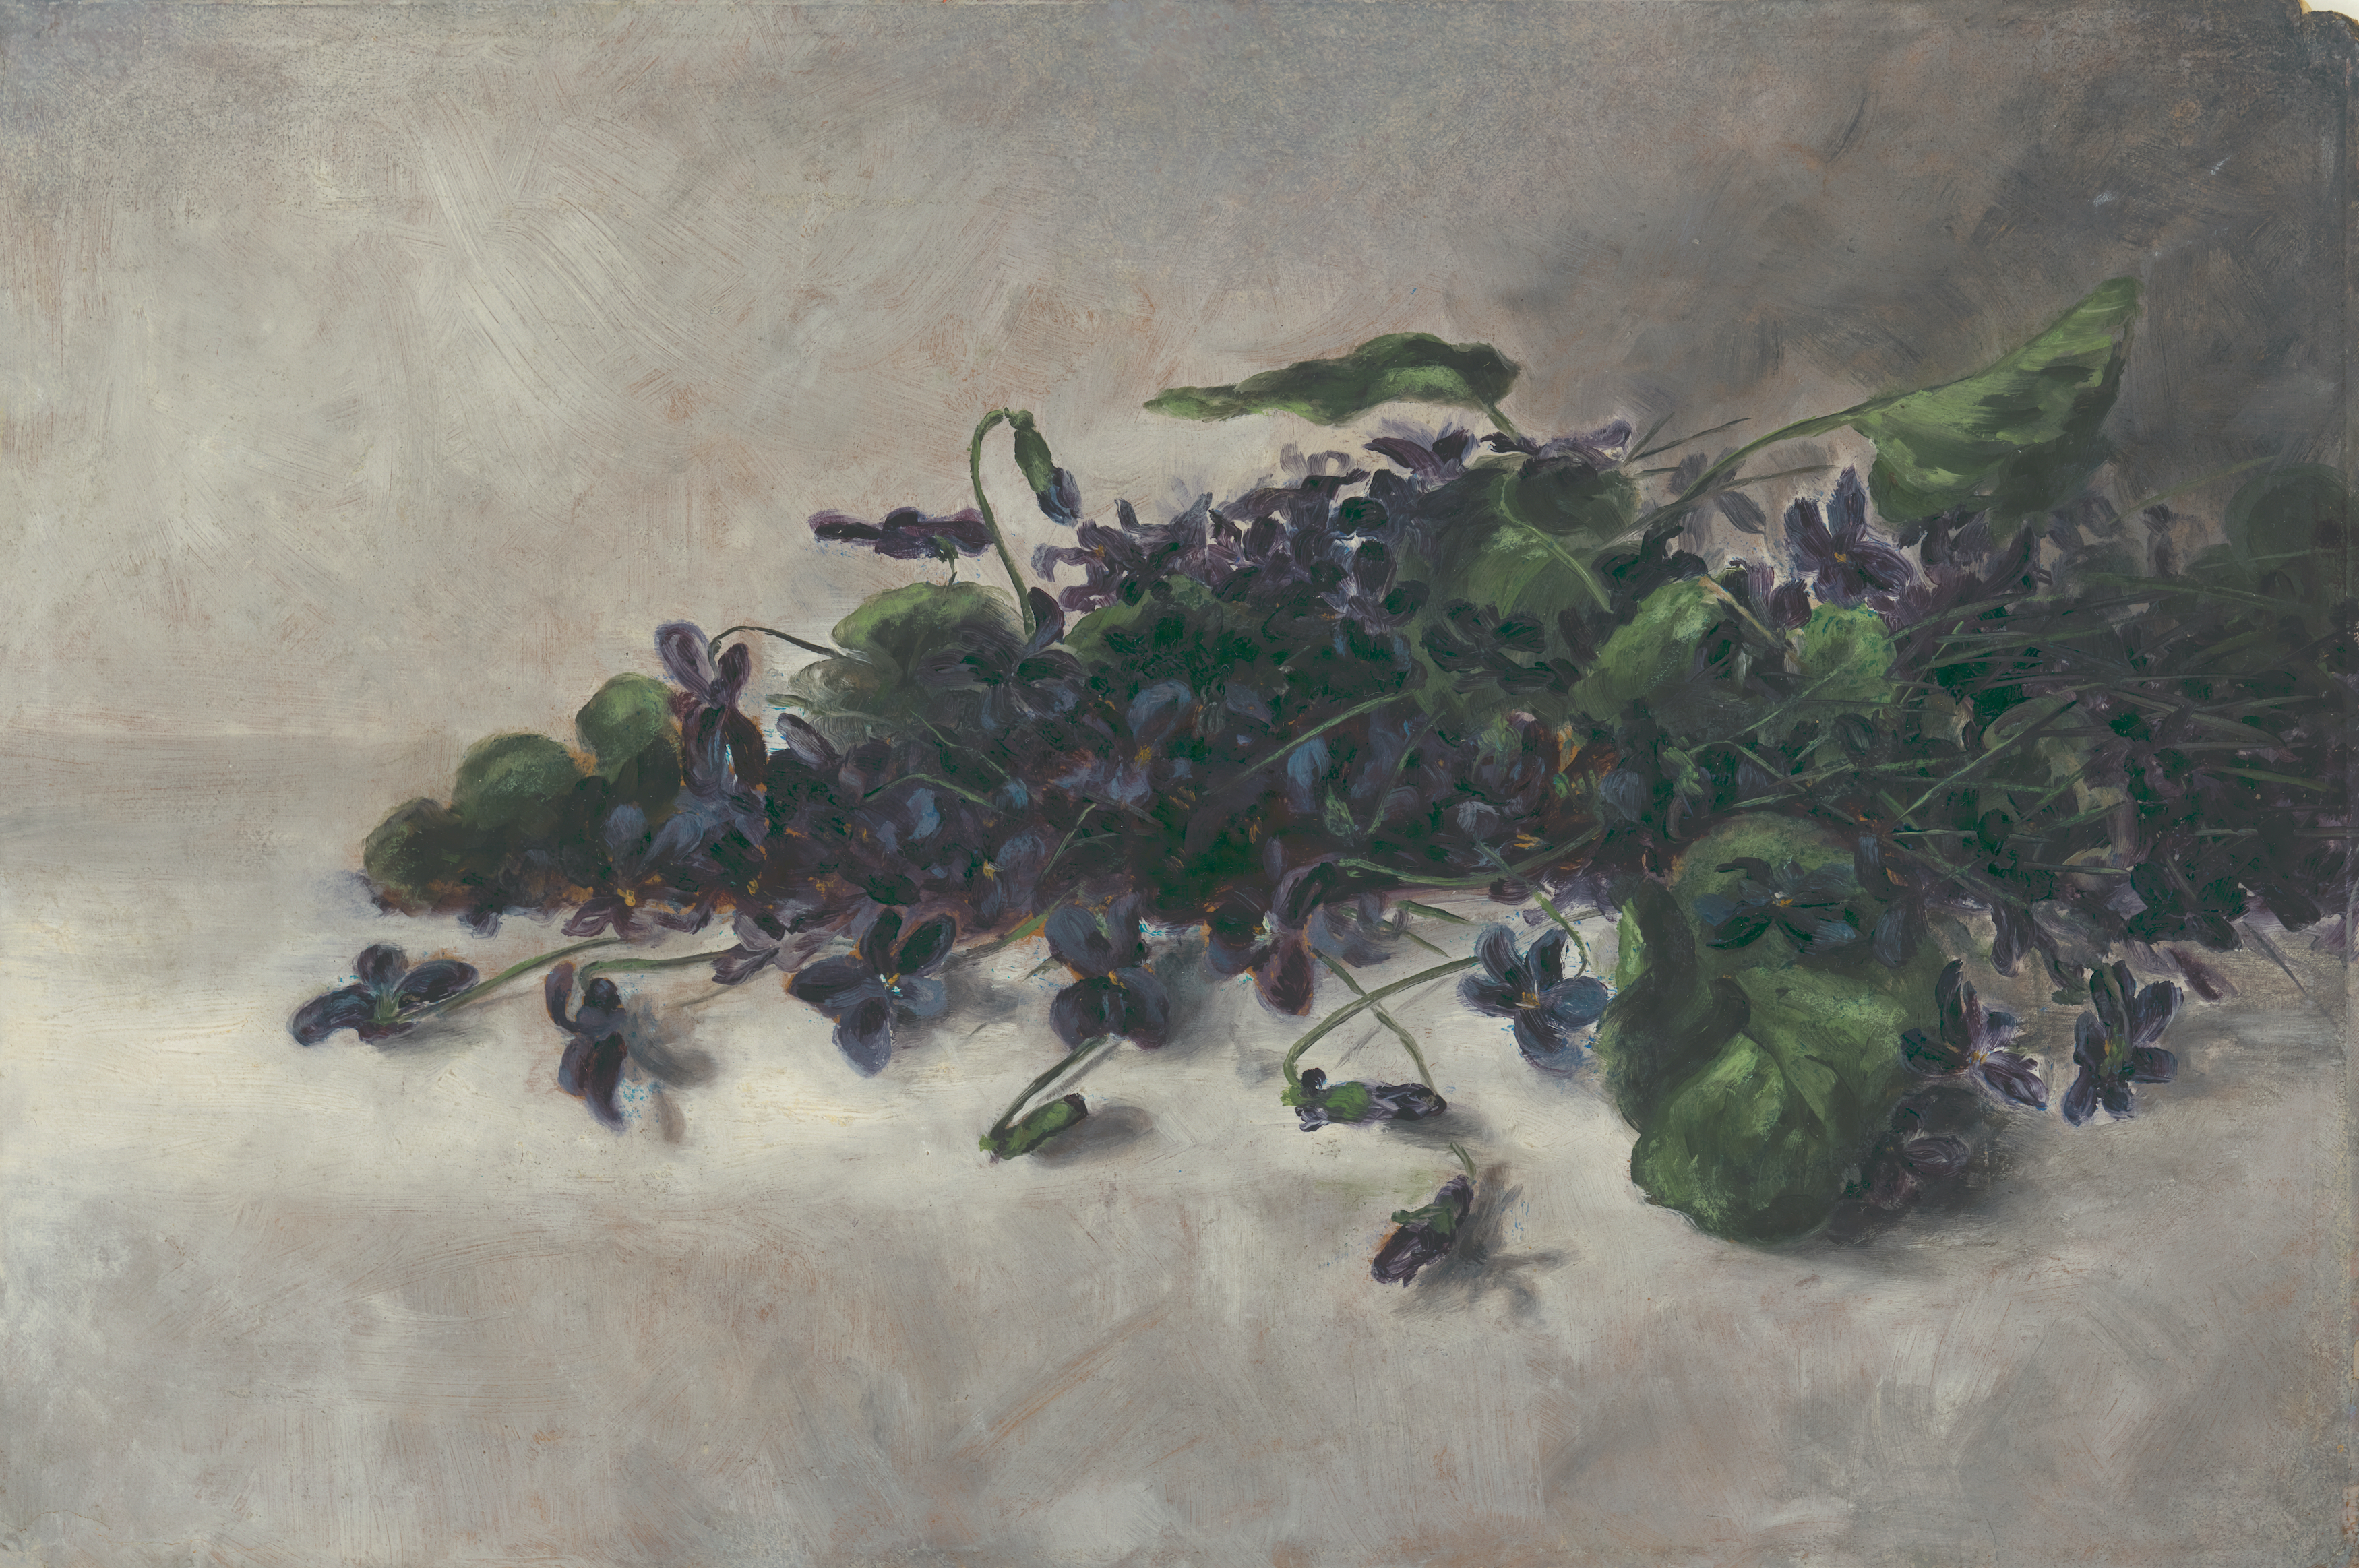 Menekşeler (orig. "Violets") by Pauline Powell Burns - 1890 civarı - 27.3 × 31.4 cm 